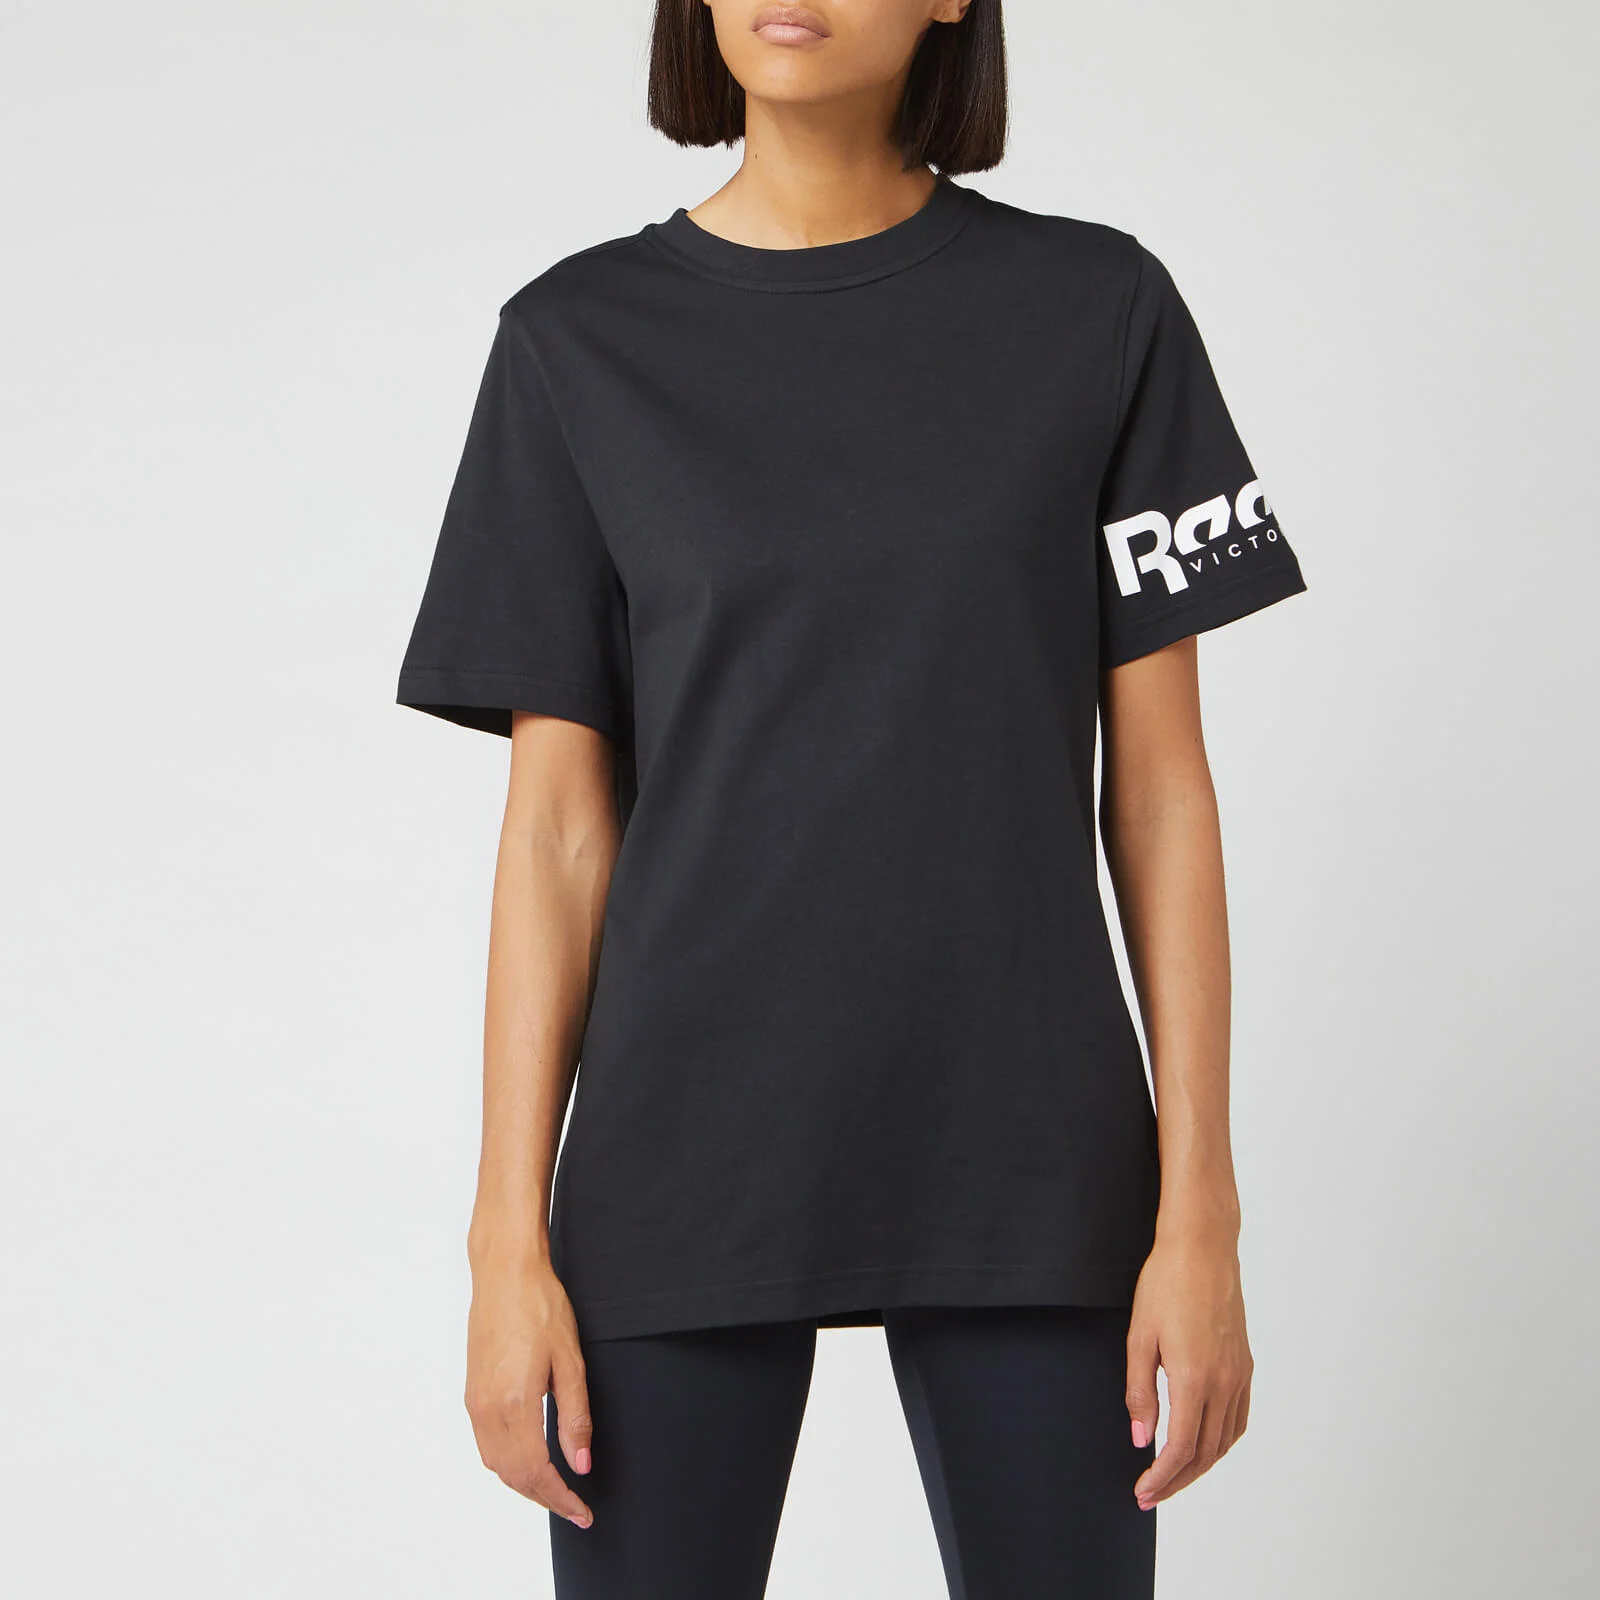 Reebok X Victoria Beckham Women's Short Sleeve T-Shirt - Black Image 1